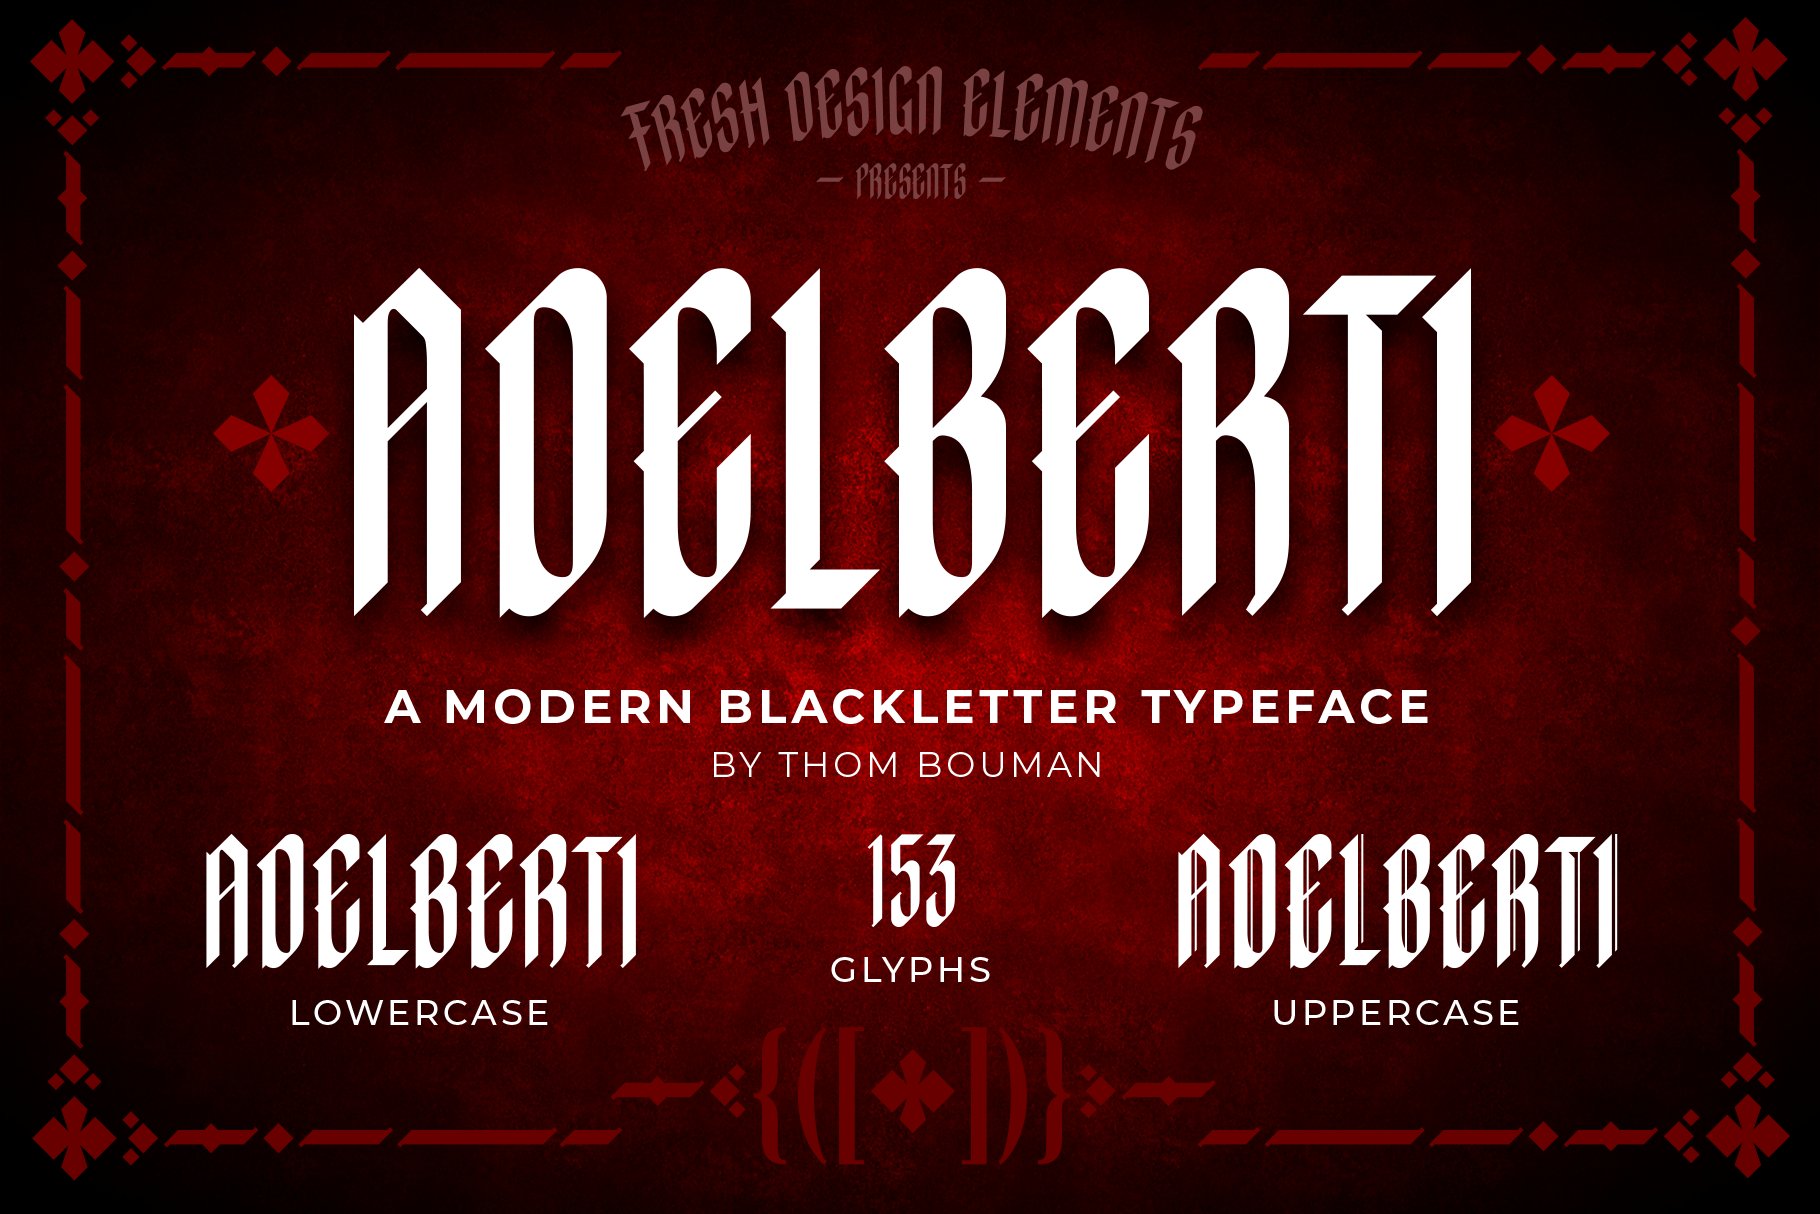 Adelberti | Modern Blackletter cover image.